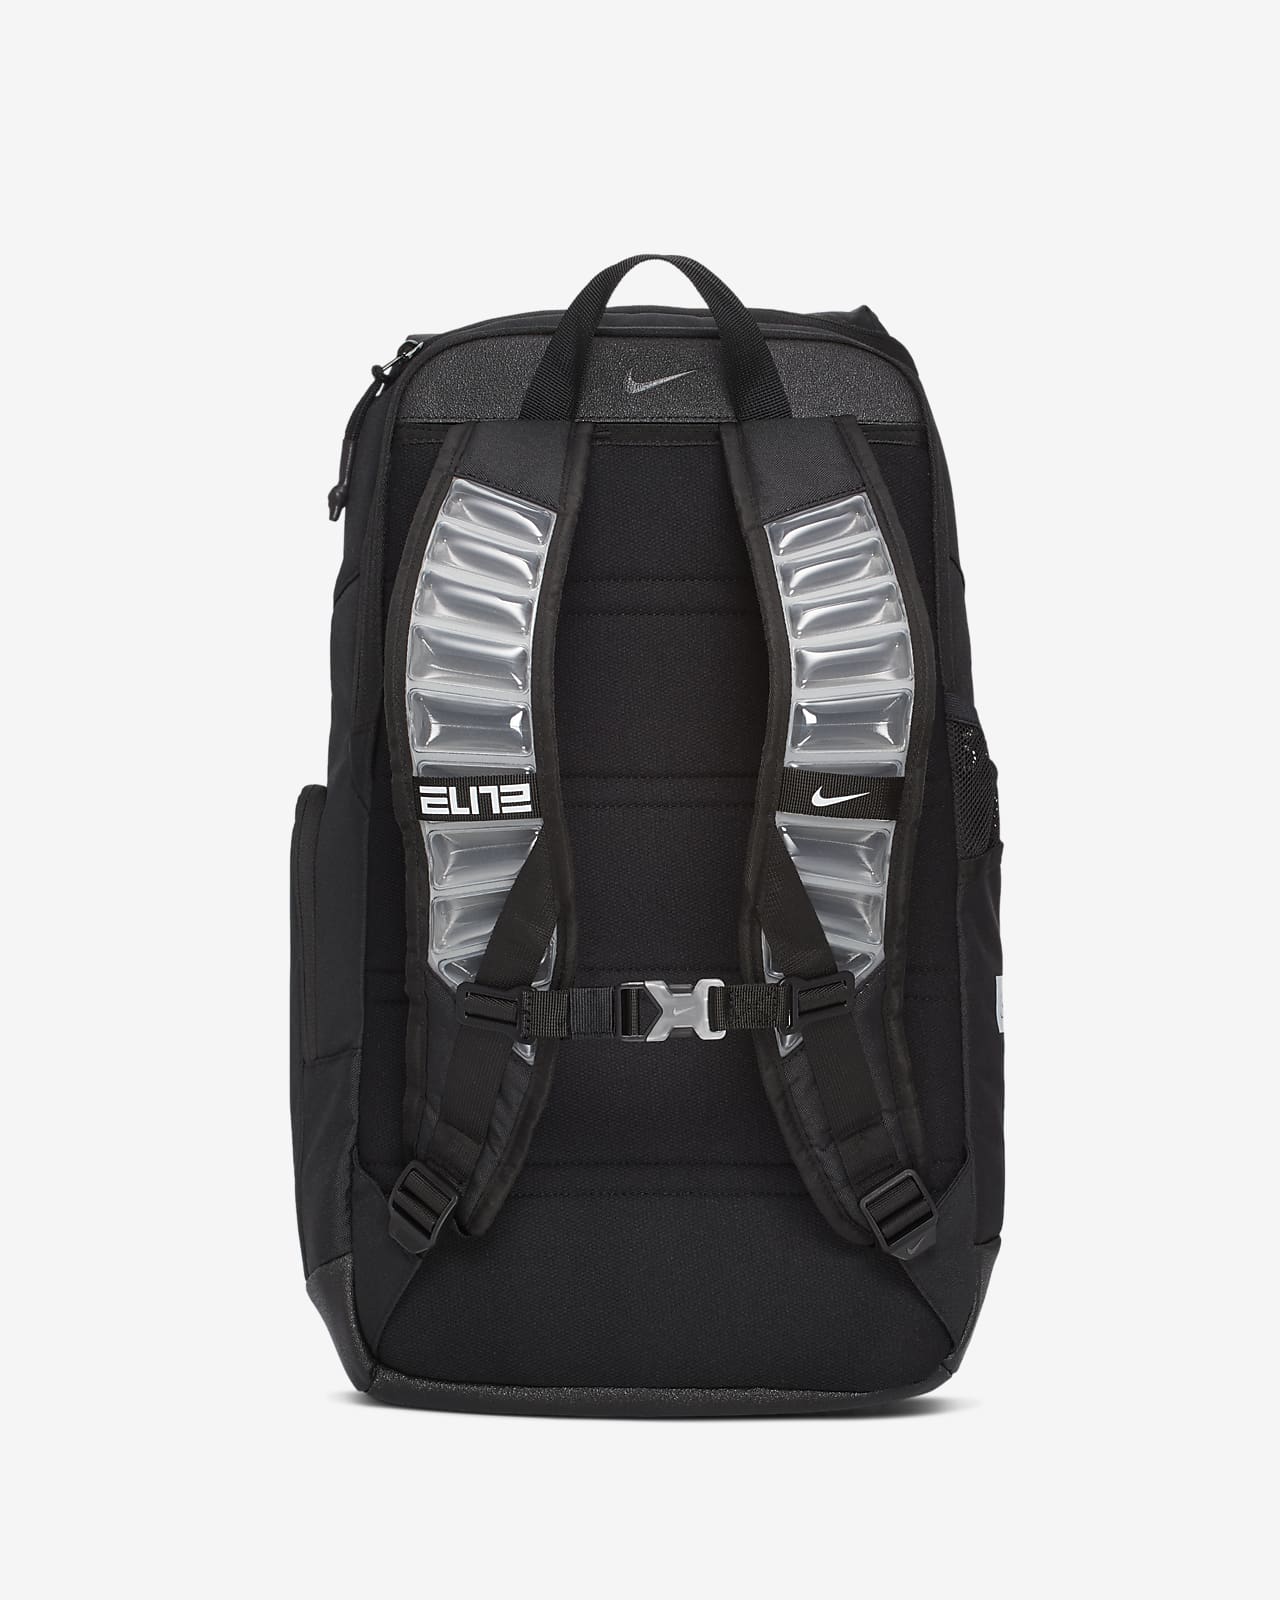 nike pro elite backpack